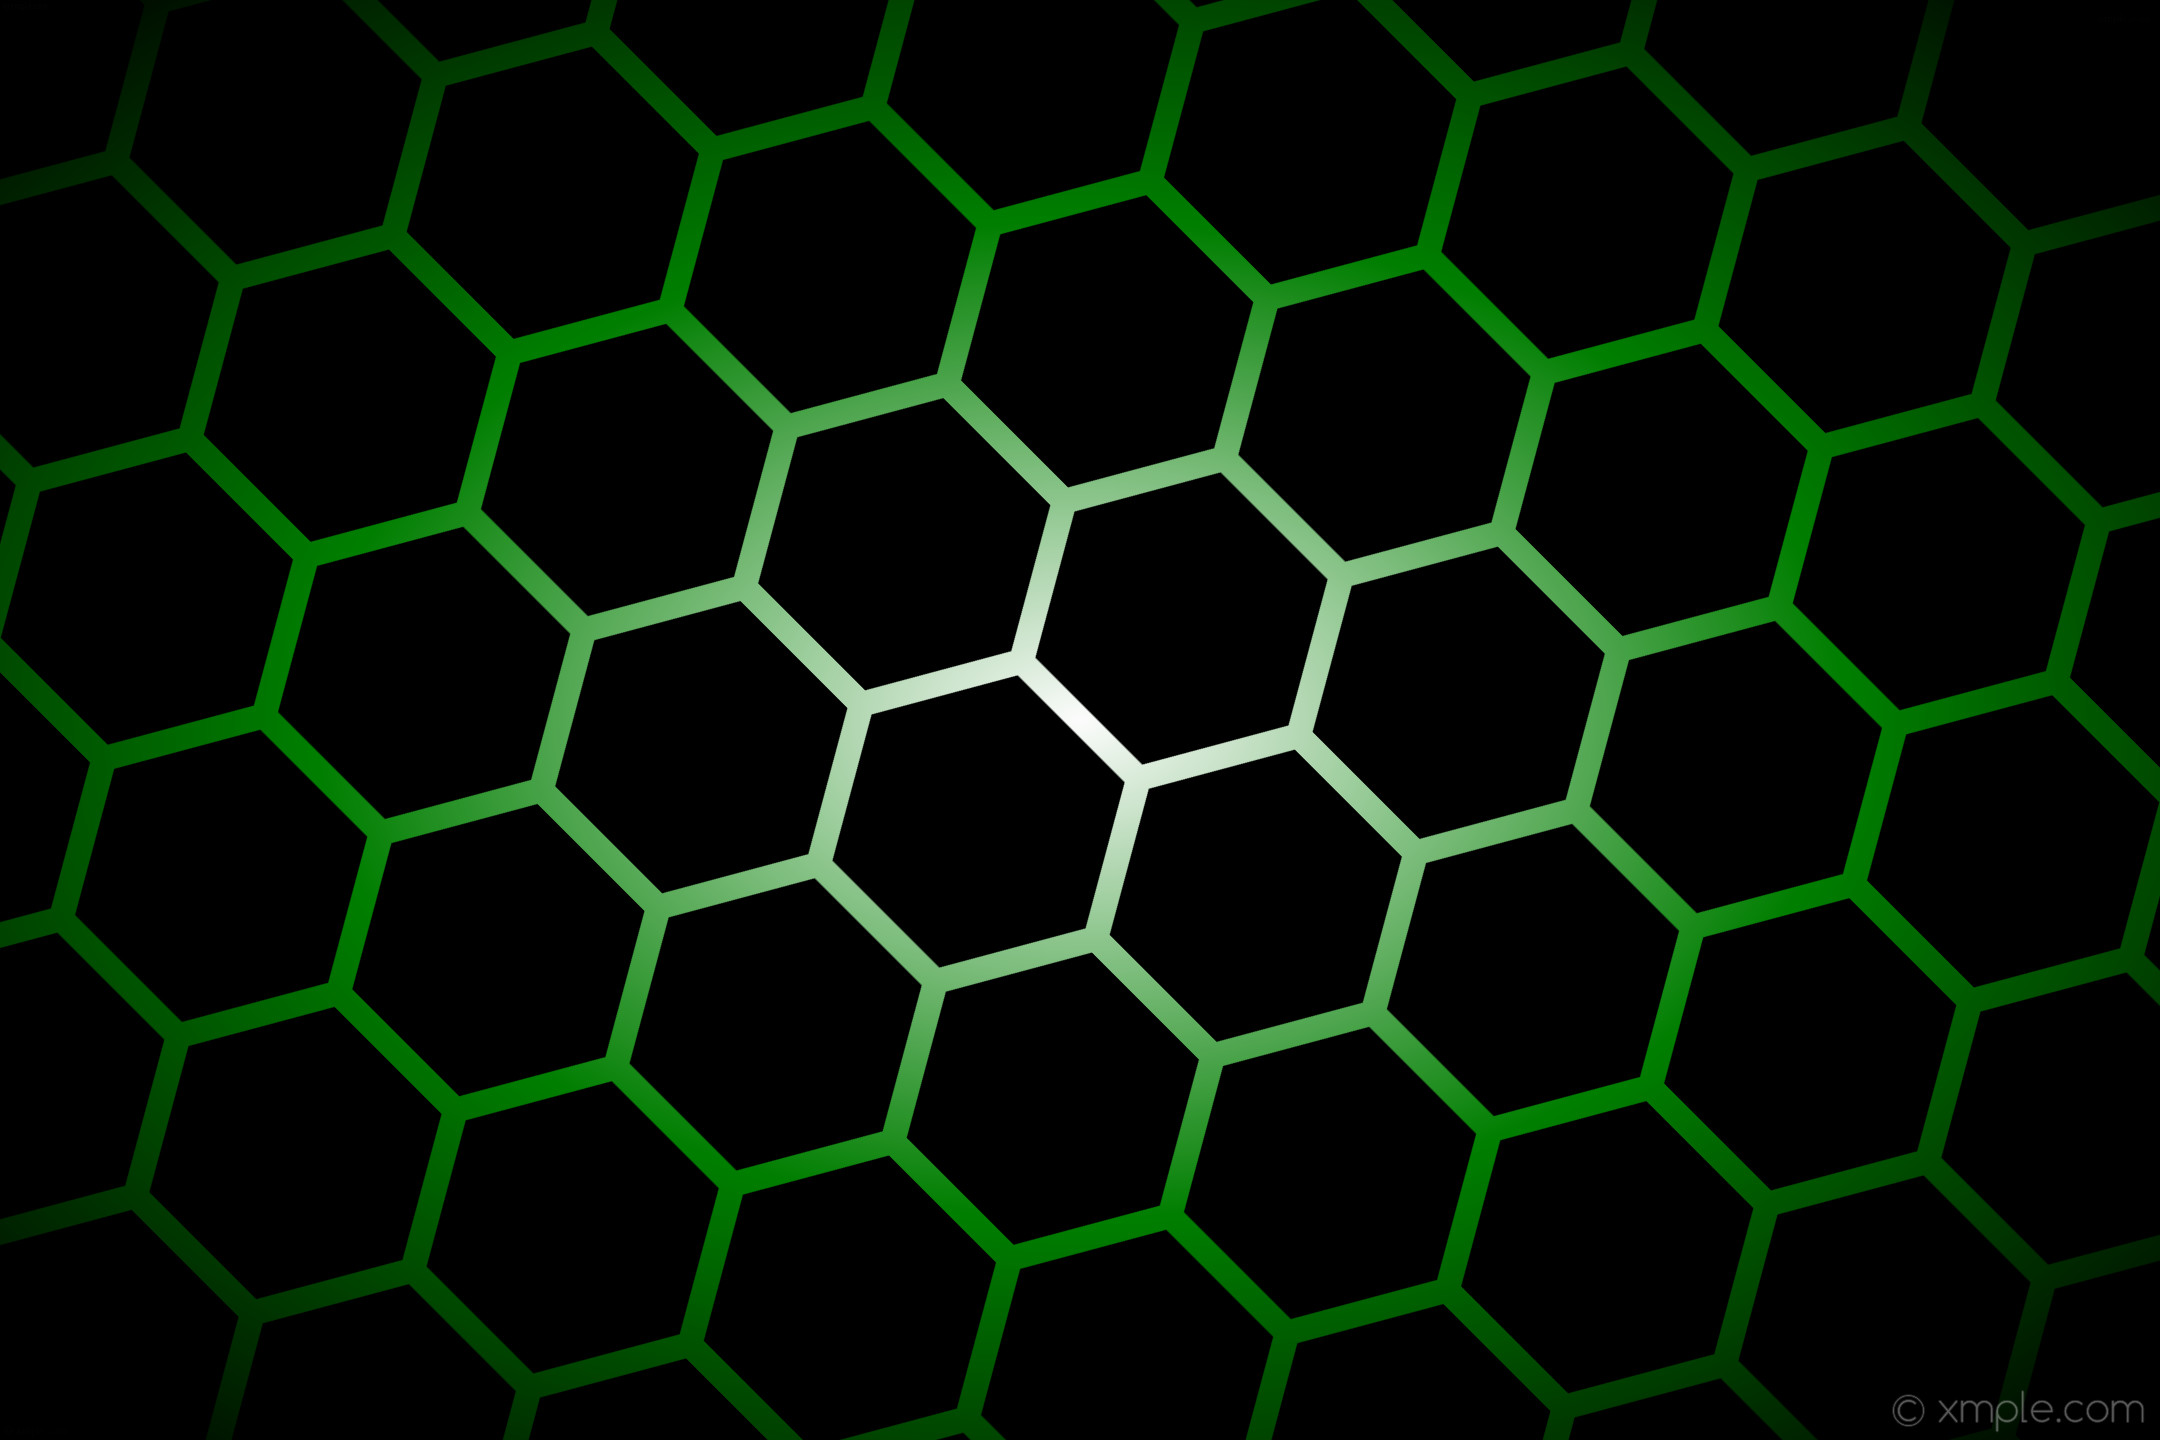 2160x1440 Wallpaper resolution. wallpaper glow hexagon green gradient white black  #000000 #ffffff #008000 diagonal 45Â°